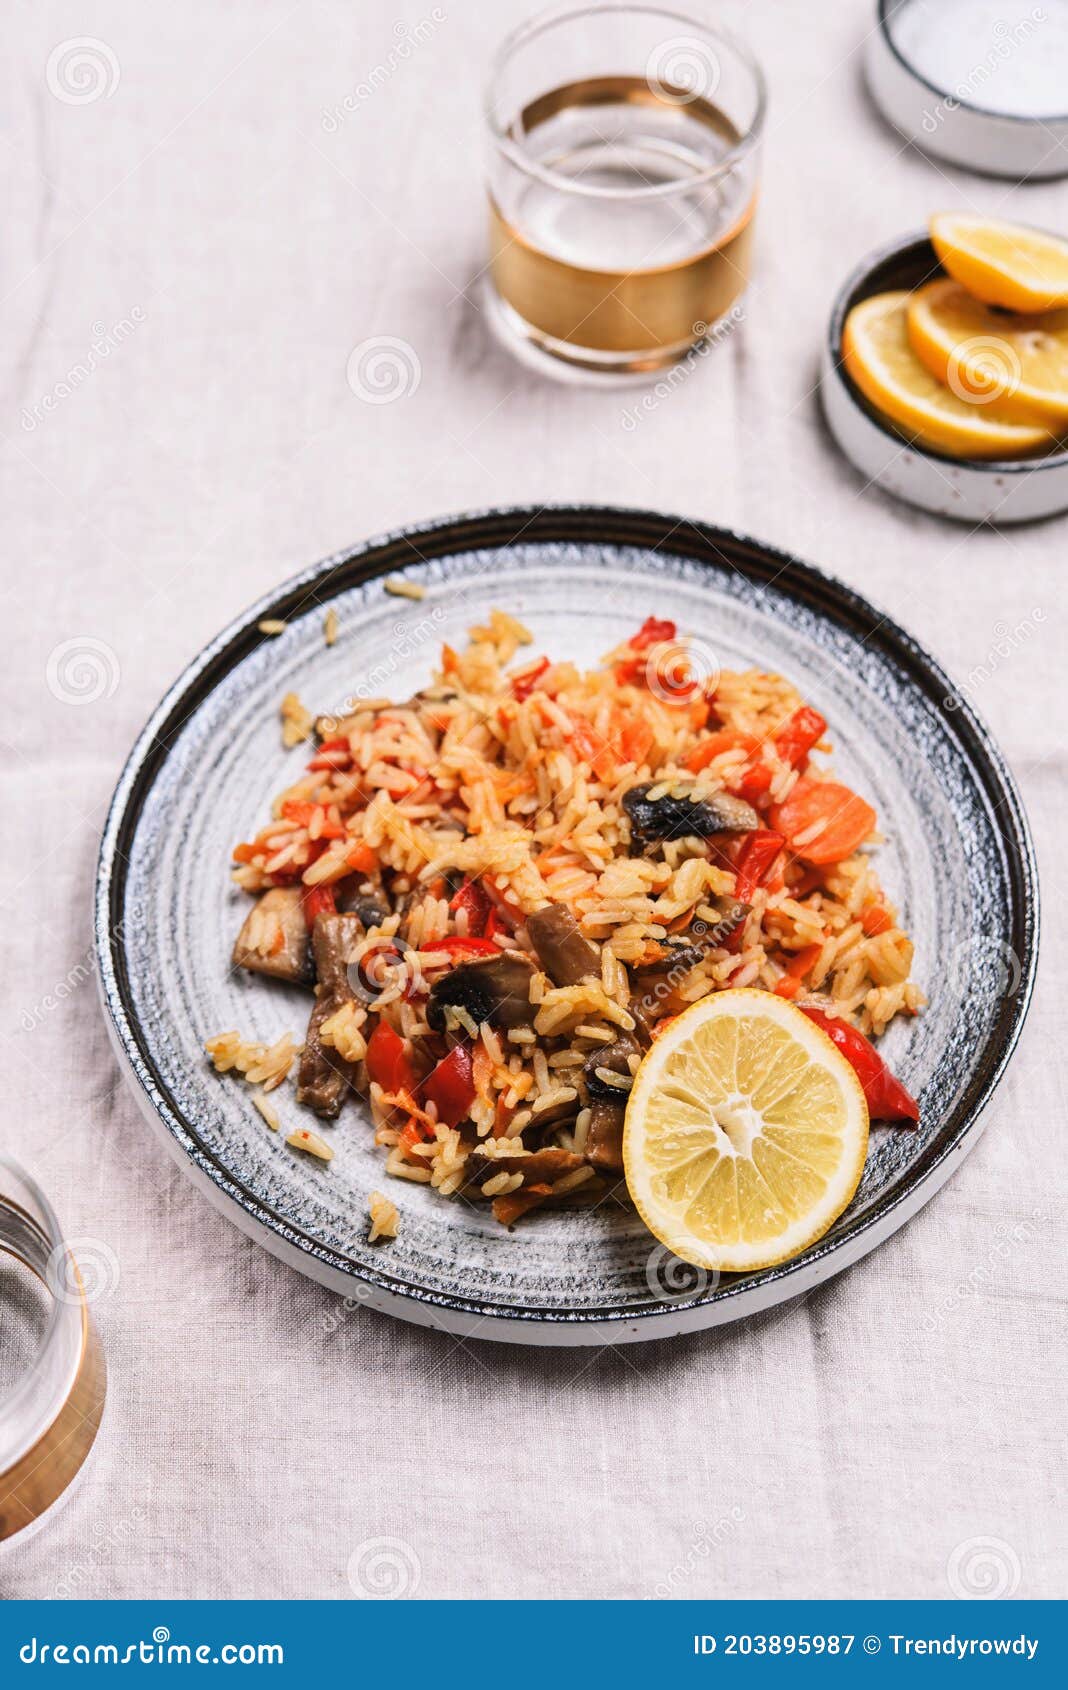 arroz con verduras y azafran, spanish dish. vegetarian risotto with vegetables, champignons and saffron